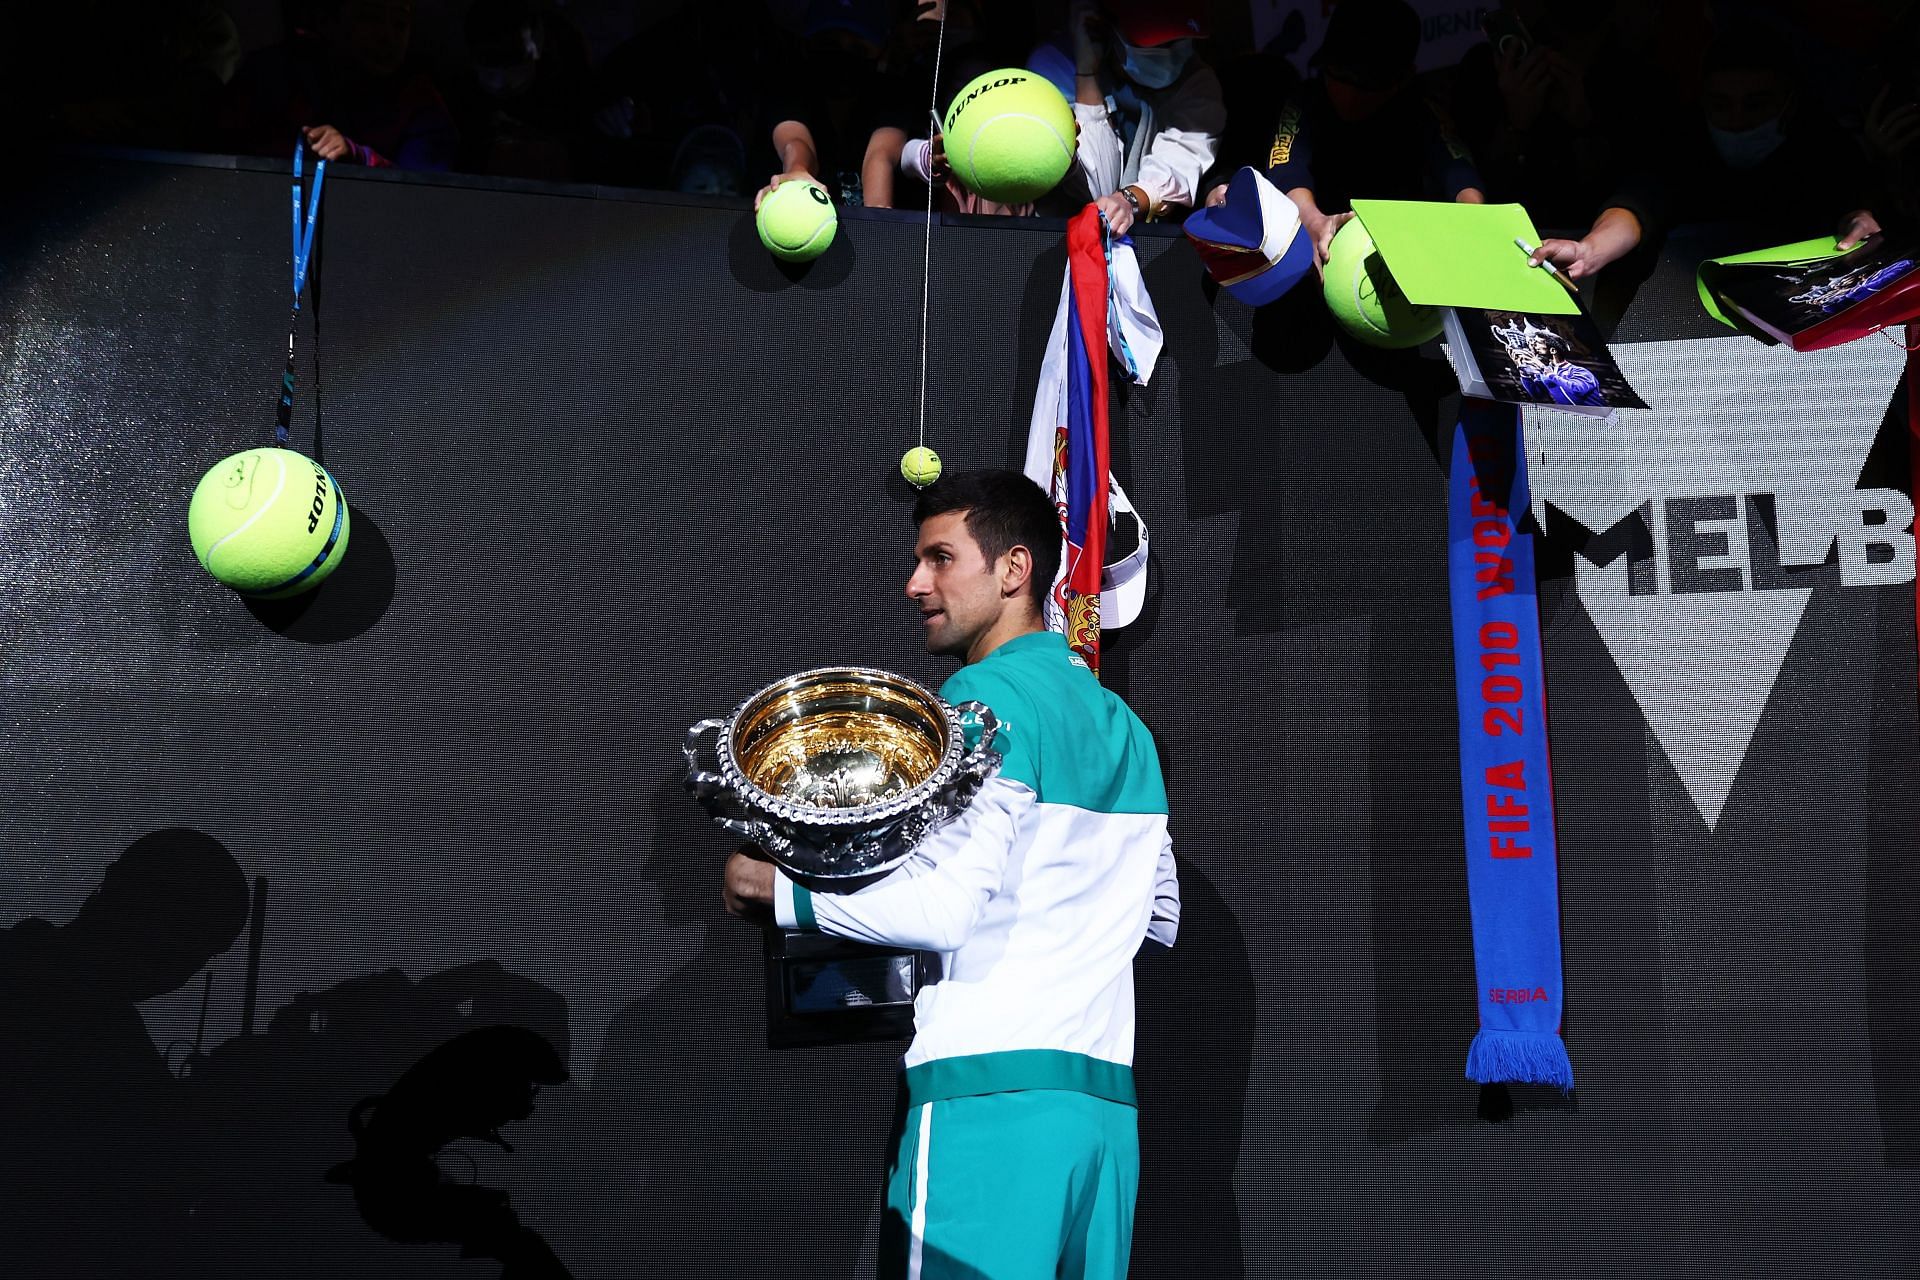 Novak Djokovic at the 2021 Australian Open